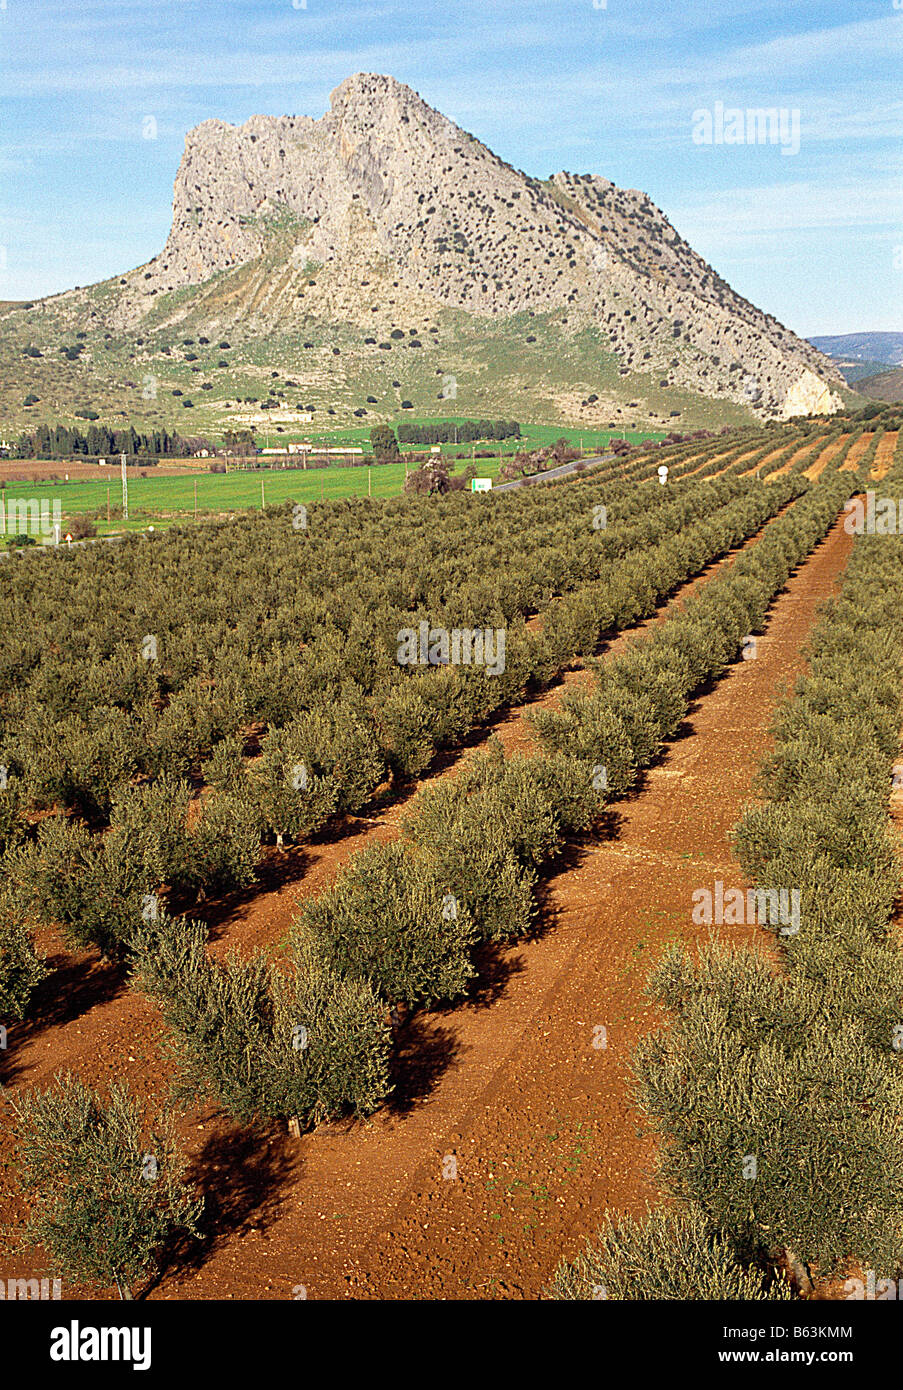 Olive groves and Peña de los Enamorados. Antequera. Malaga province. Andalusia. Spain. Stock Photo